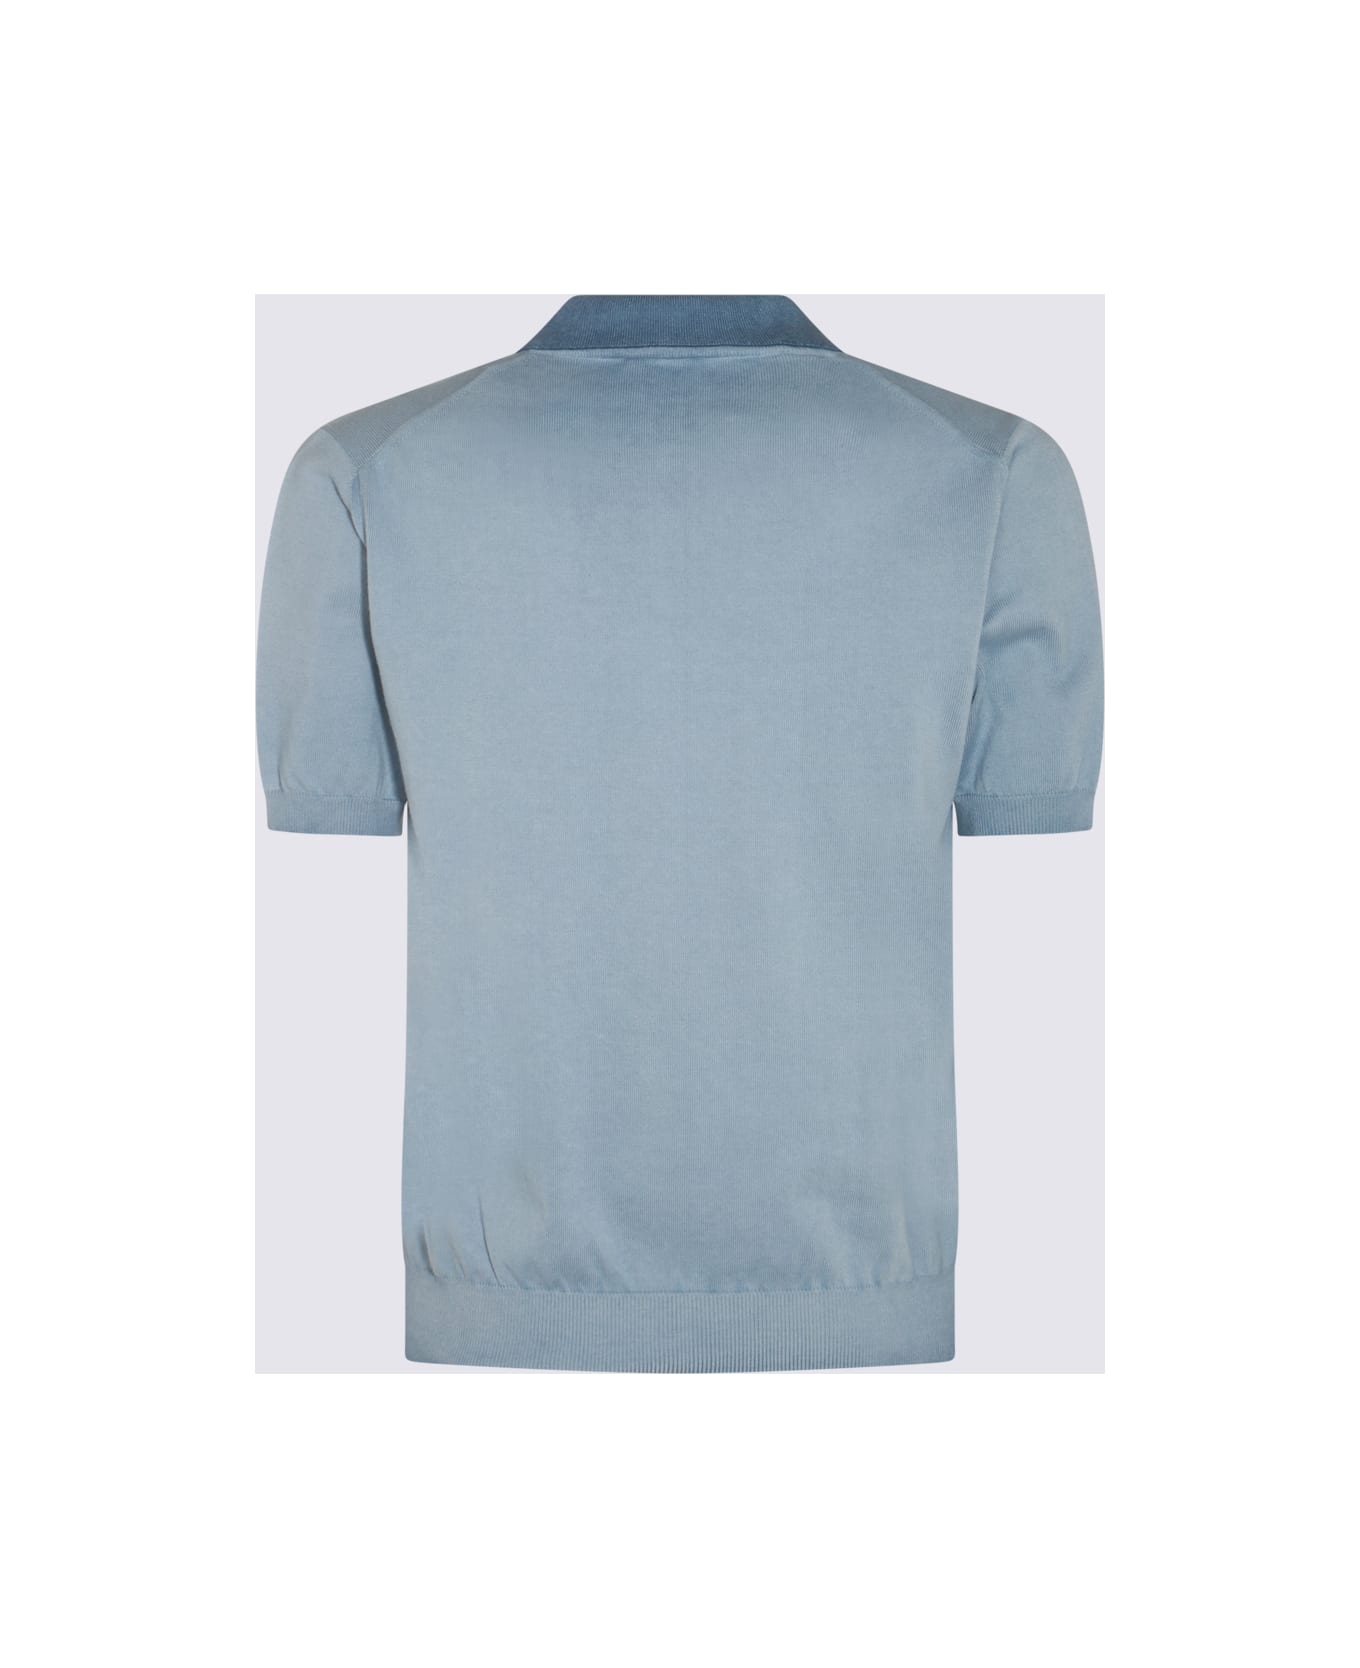 Altea Light Blue Cotton Polo Shirt - Carta da zucchero